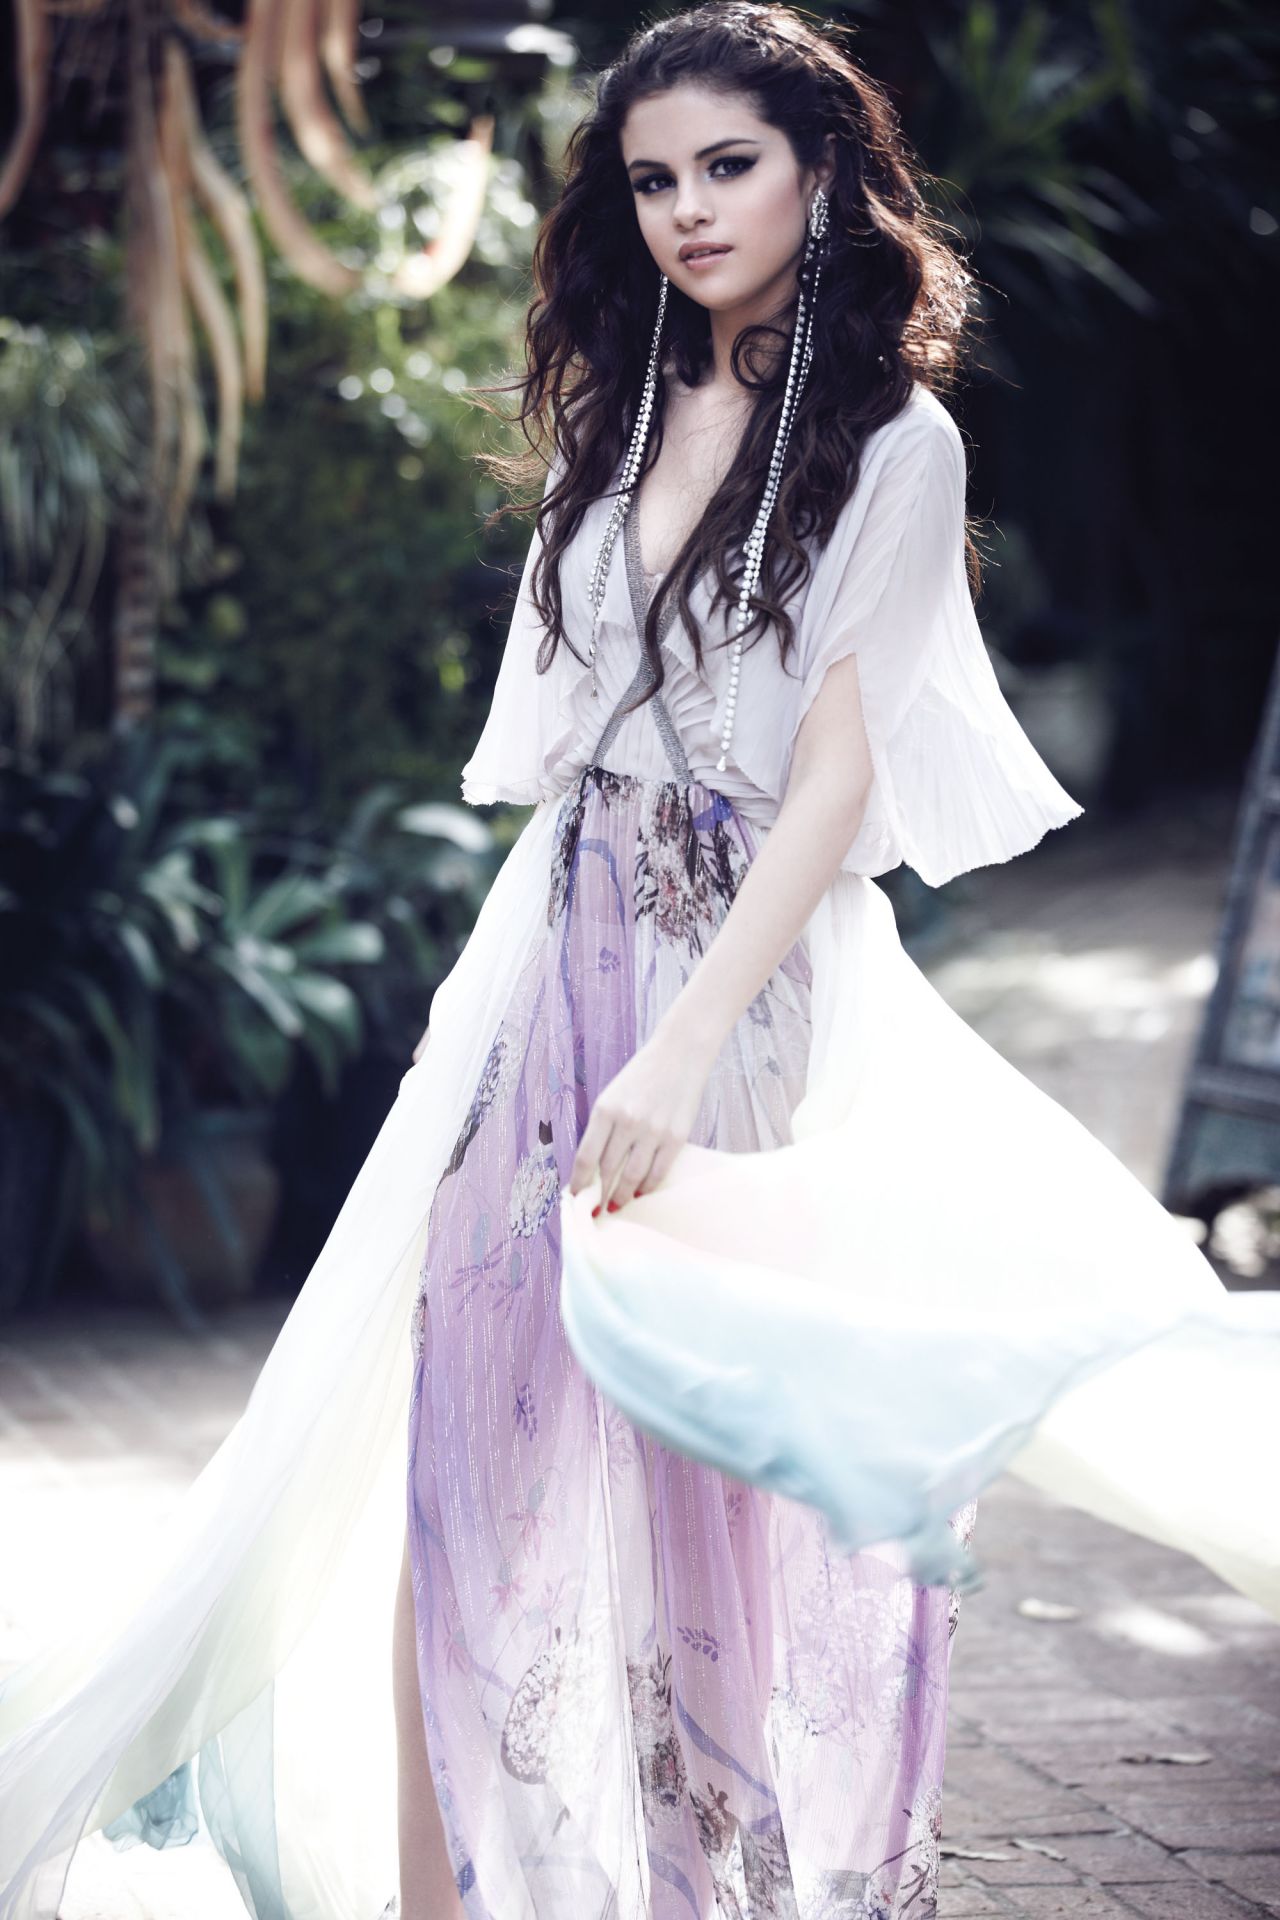 Selena Gomez - Stars Dance (2013) Album Photoshoot